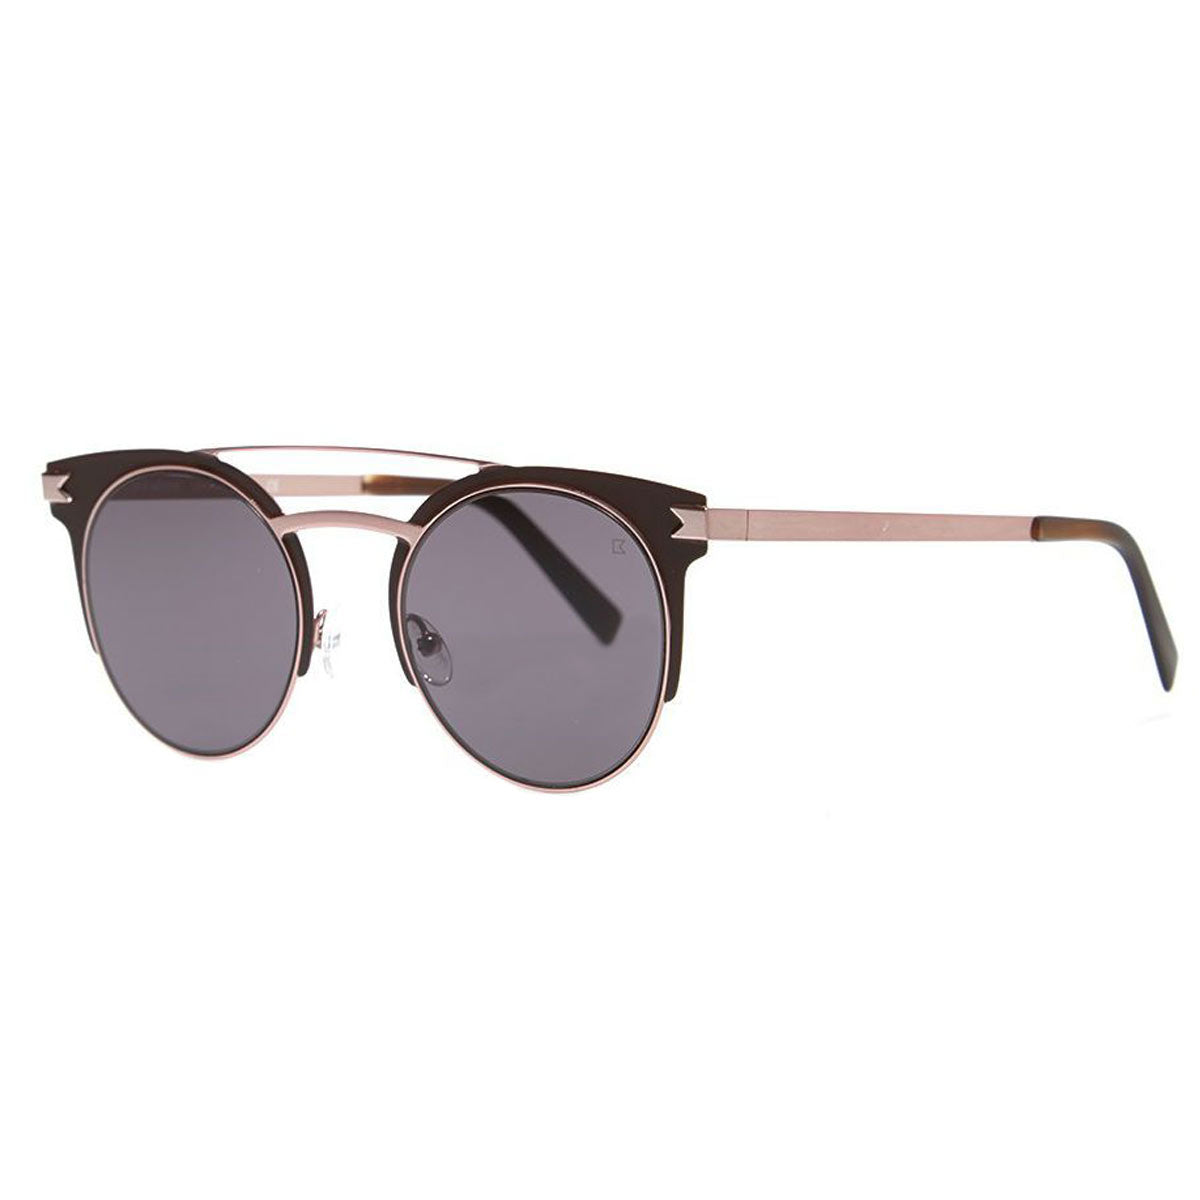 Bob Sdrunk Women's Sunglasses - Isotta Grey Solid Lens / ISOTTA-106-50-20-150